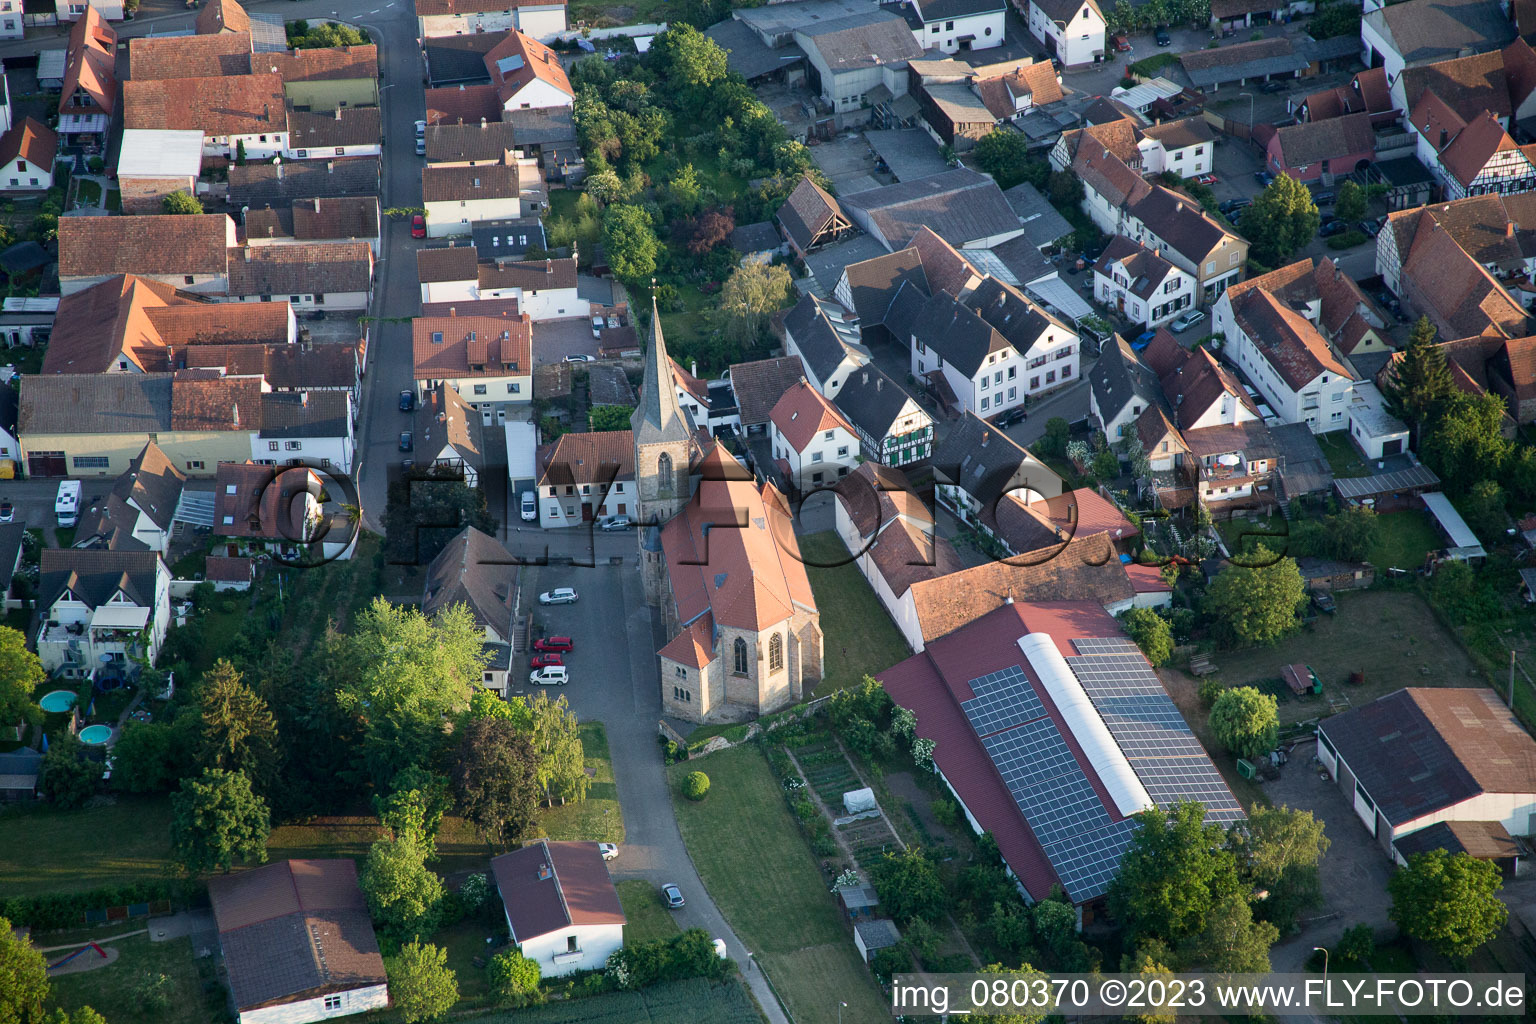 Drone recording of District Ingenheim in Billigheim-Ingenheim in the state Rhineland-Palatinate, Germany